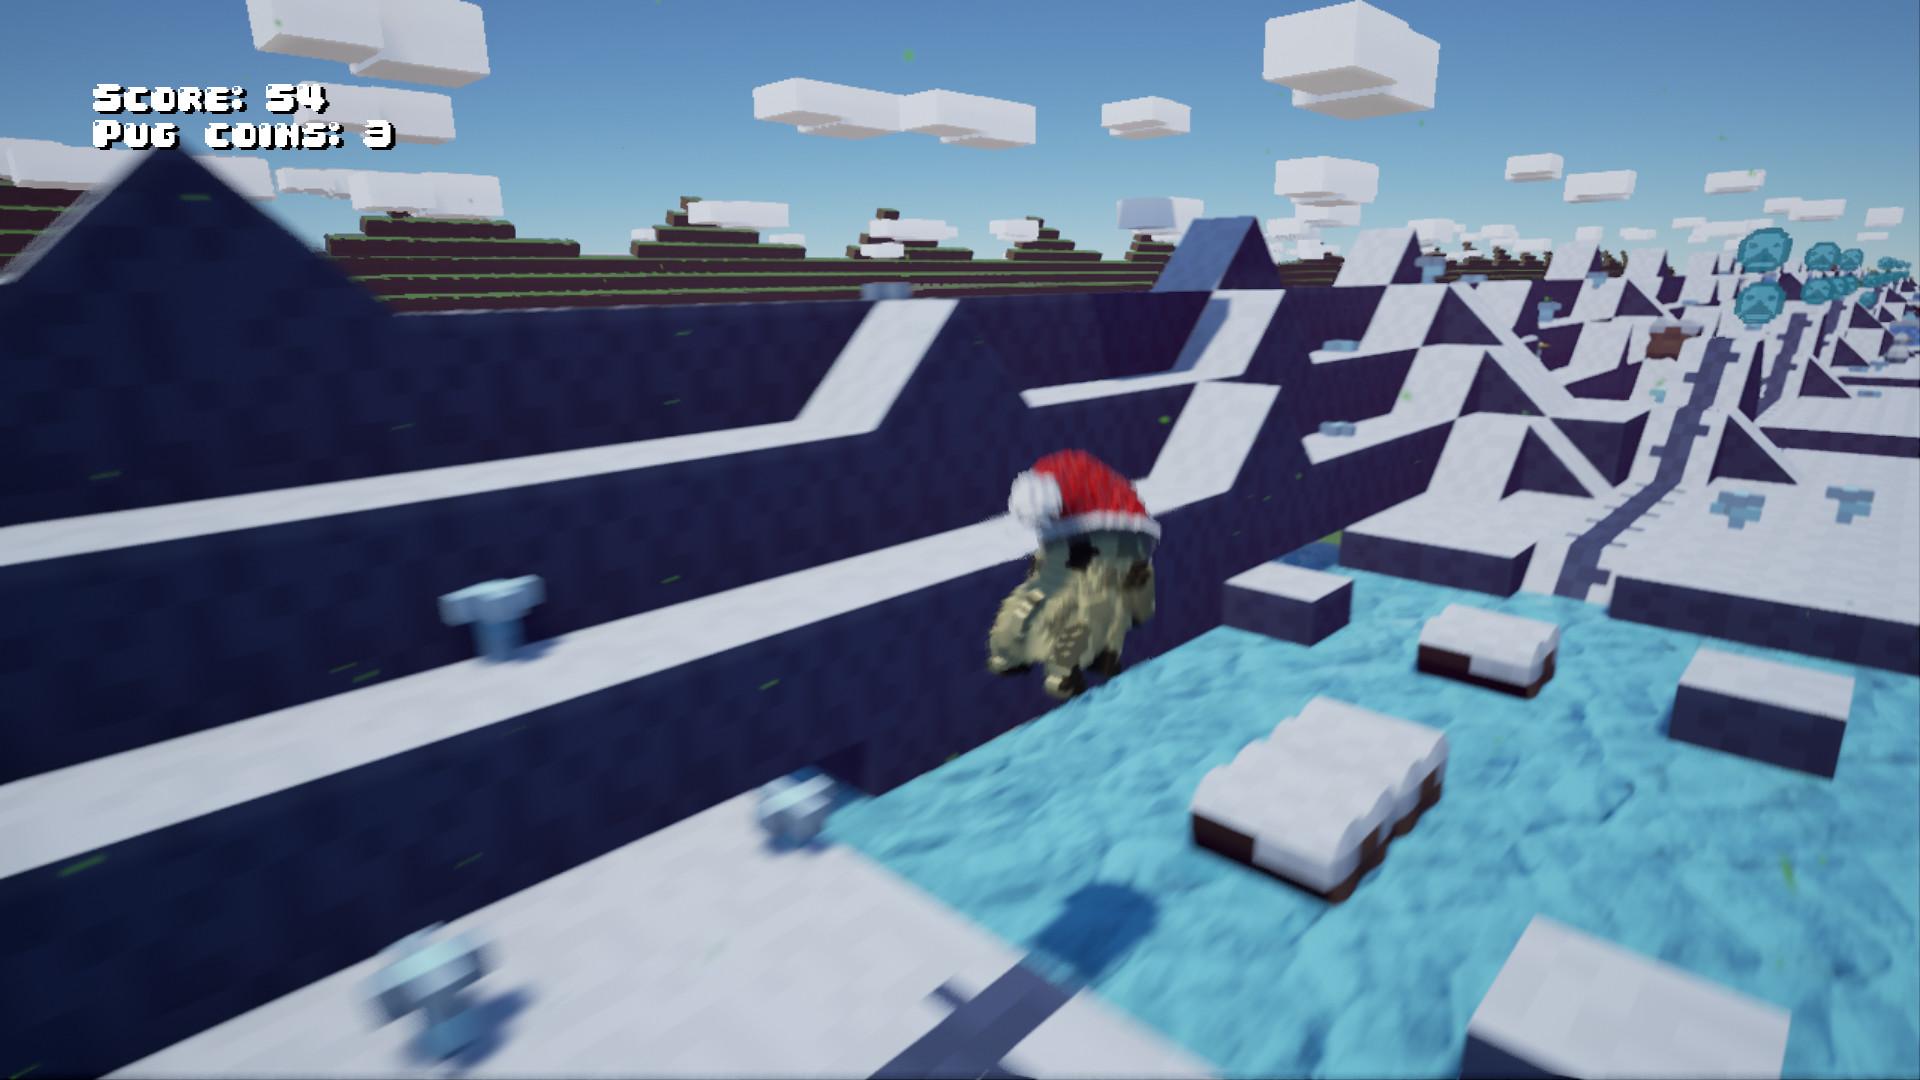 Screenshot №1 from game Turbo Pug 3D